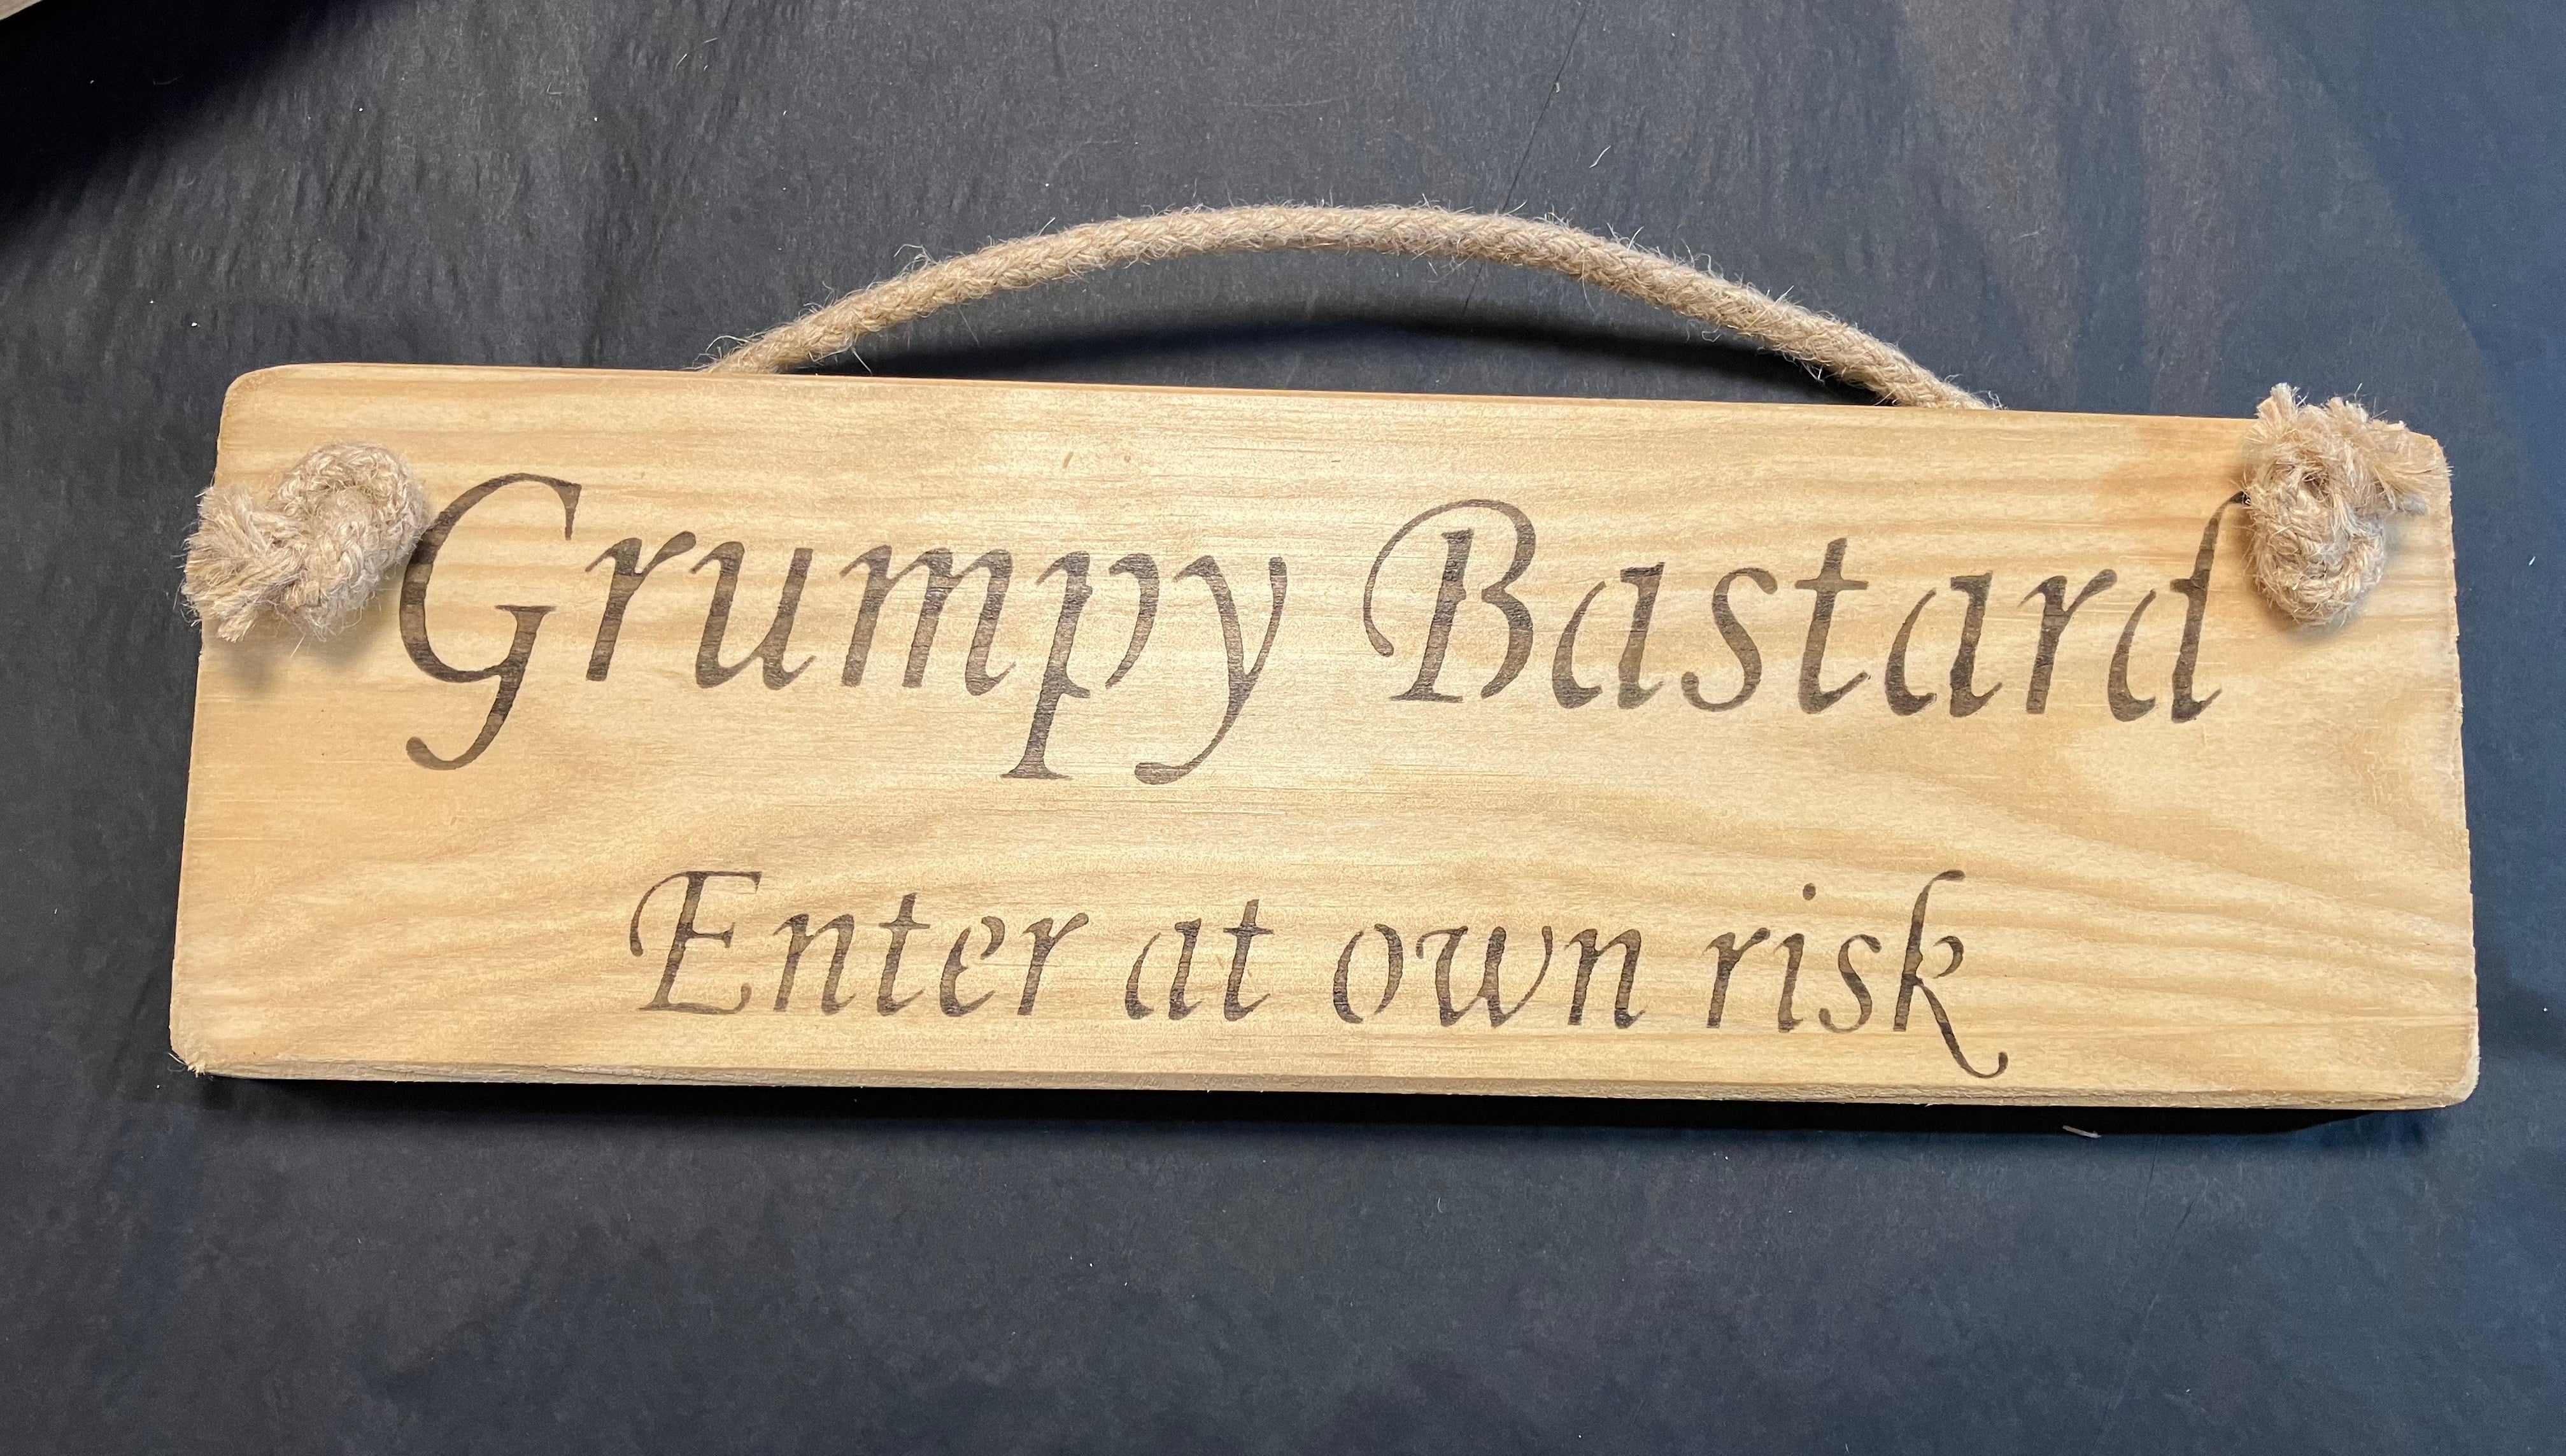 Grumpy bastard enter at own risk wooden roped sign